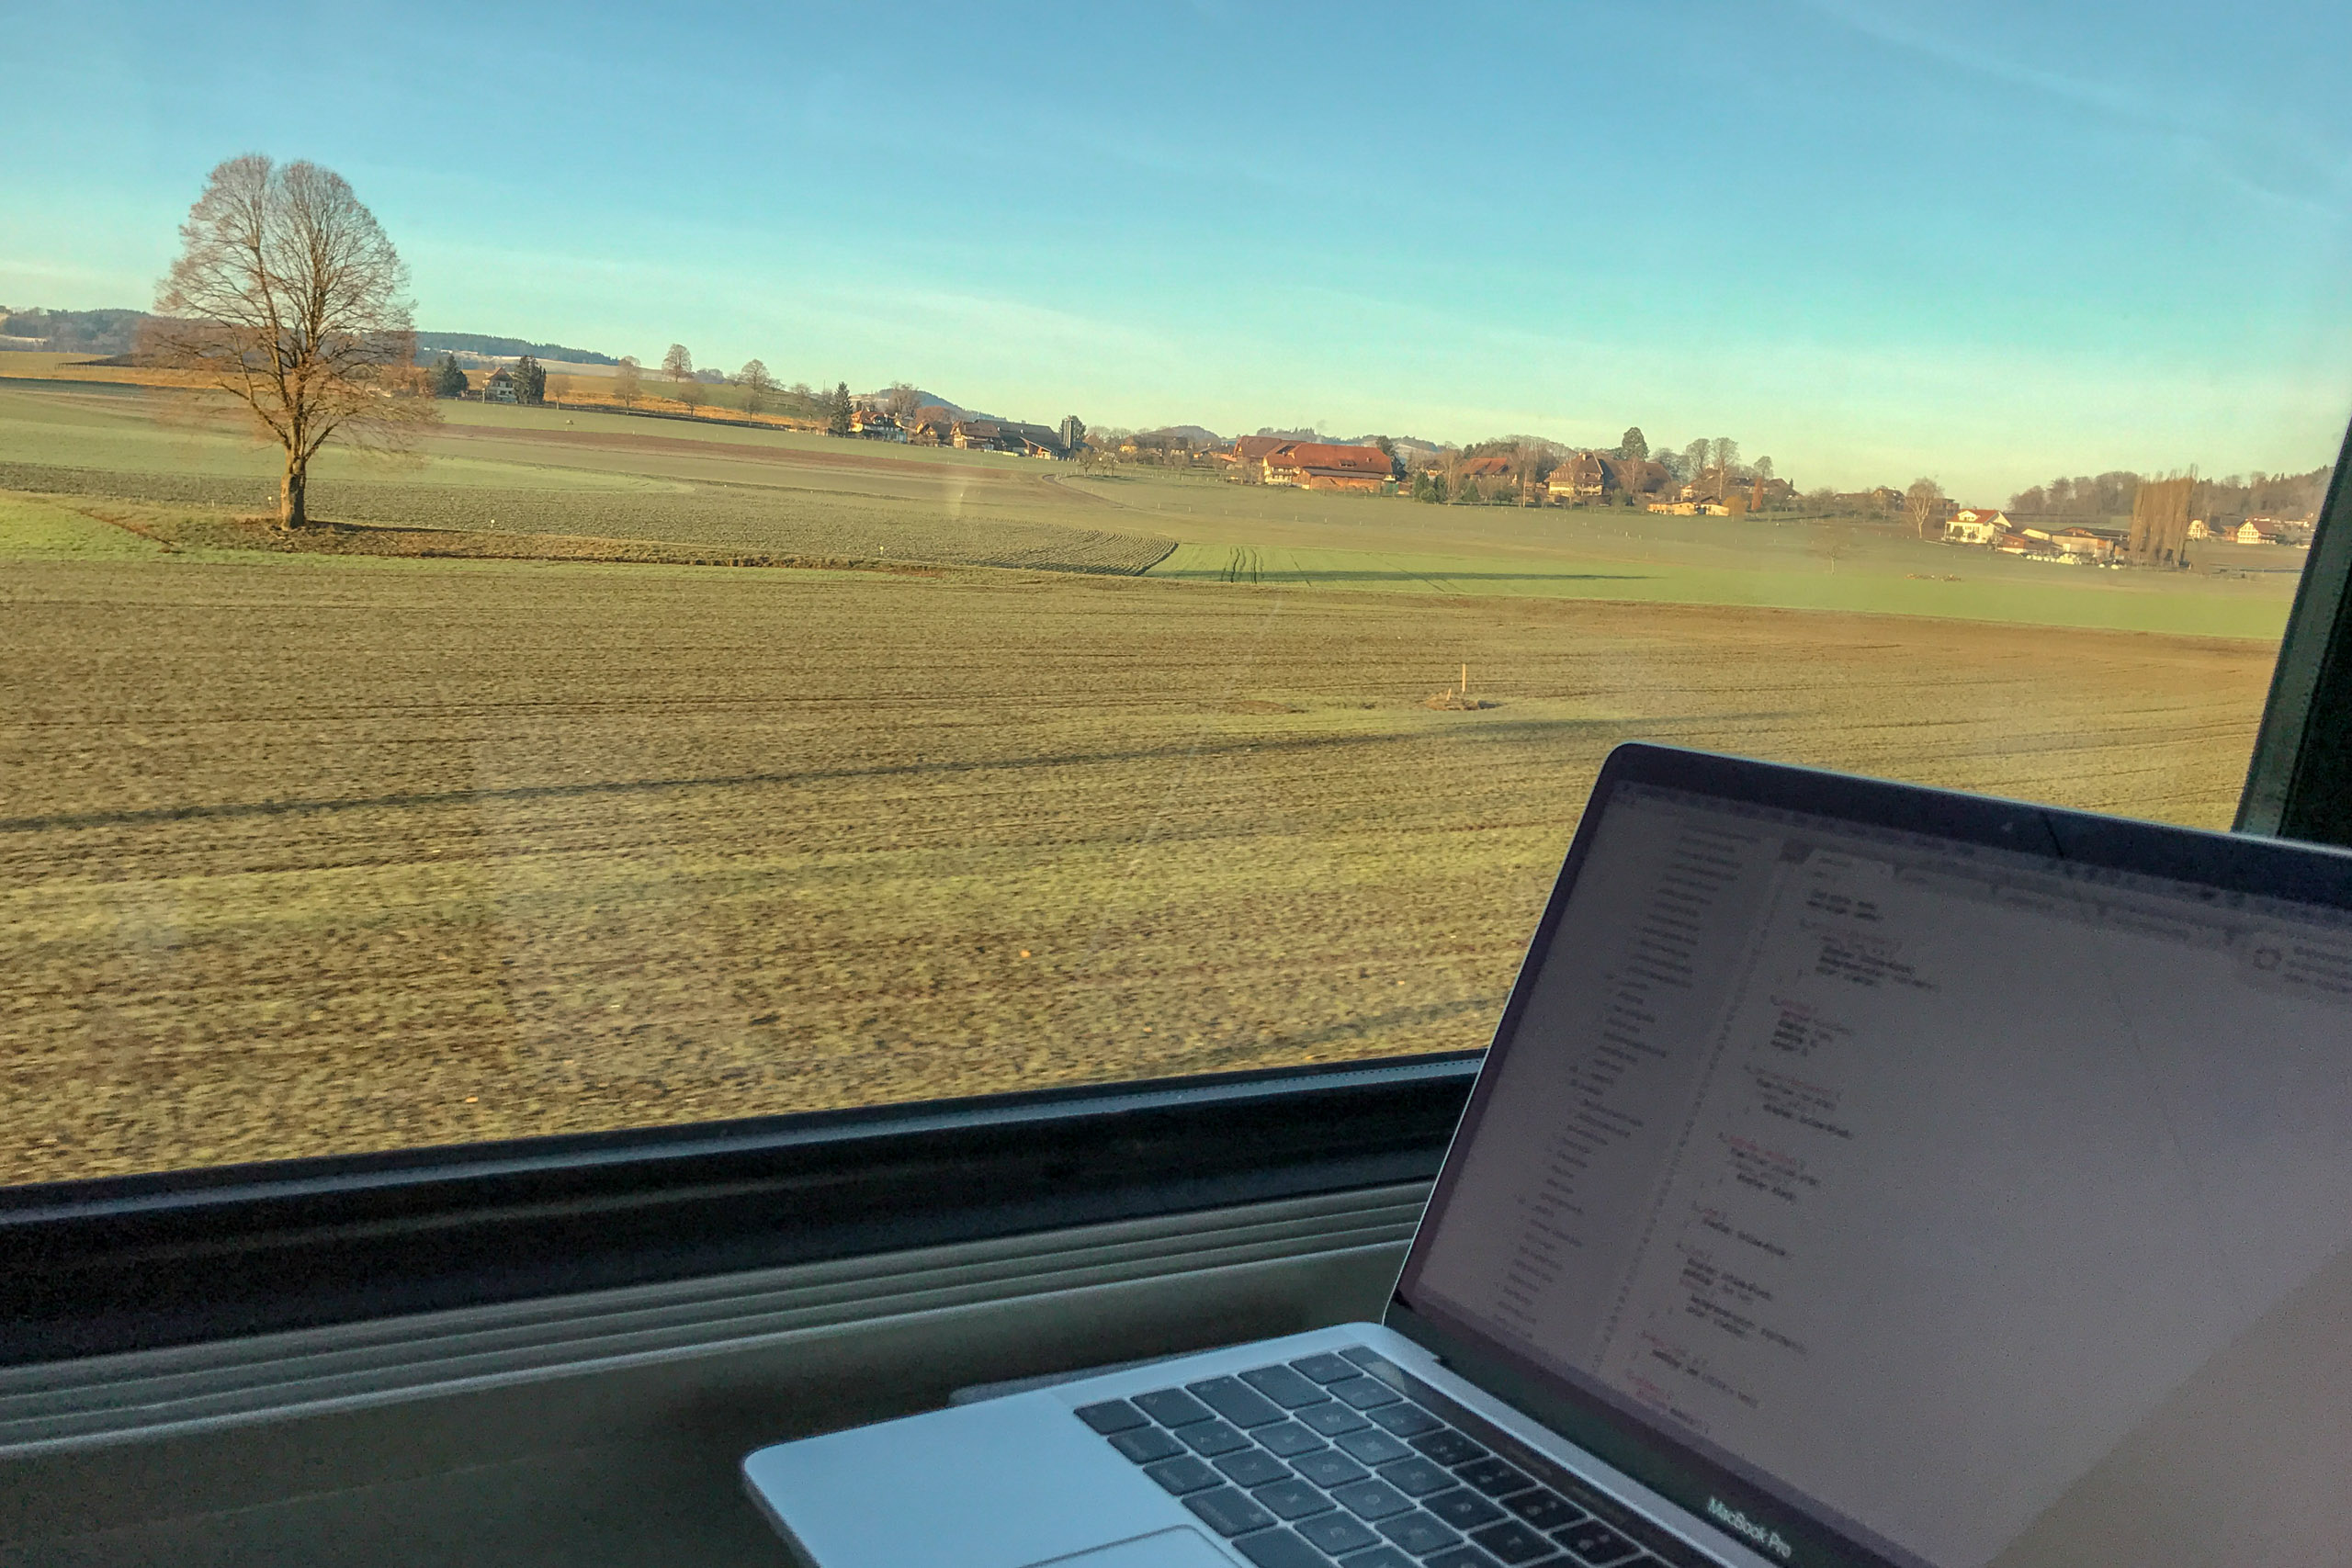 Remote working on a train in Switzerland